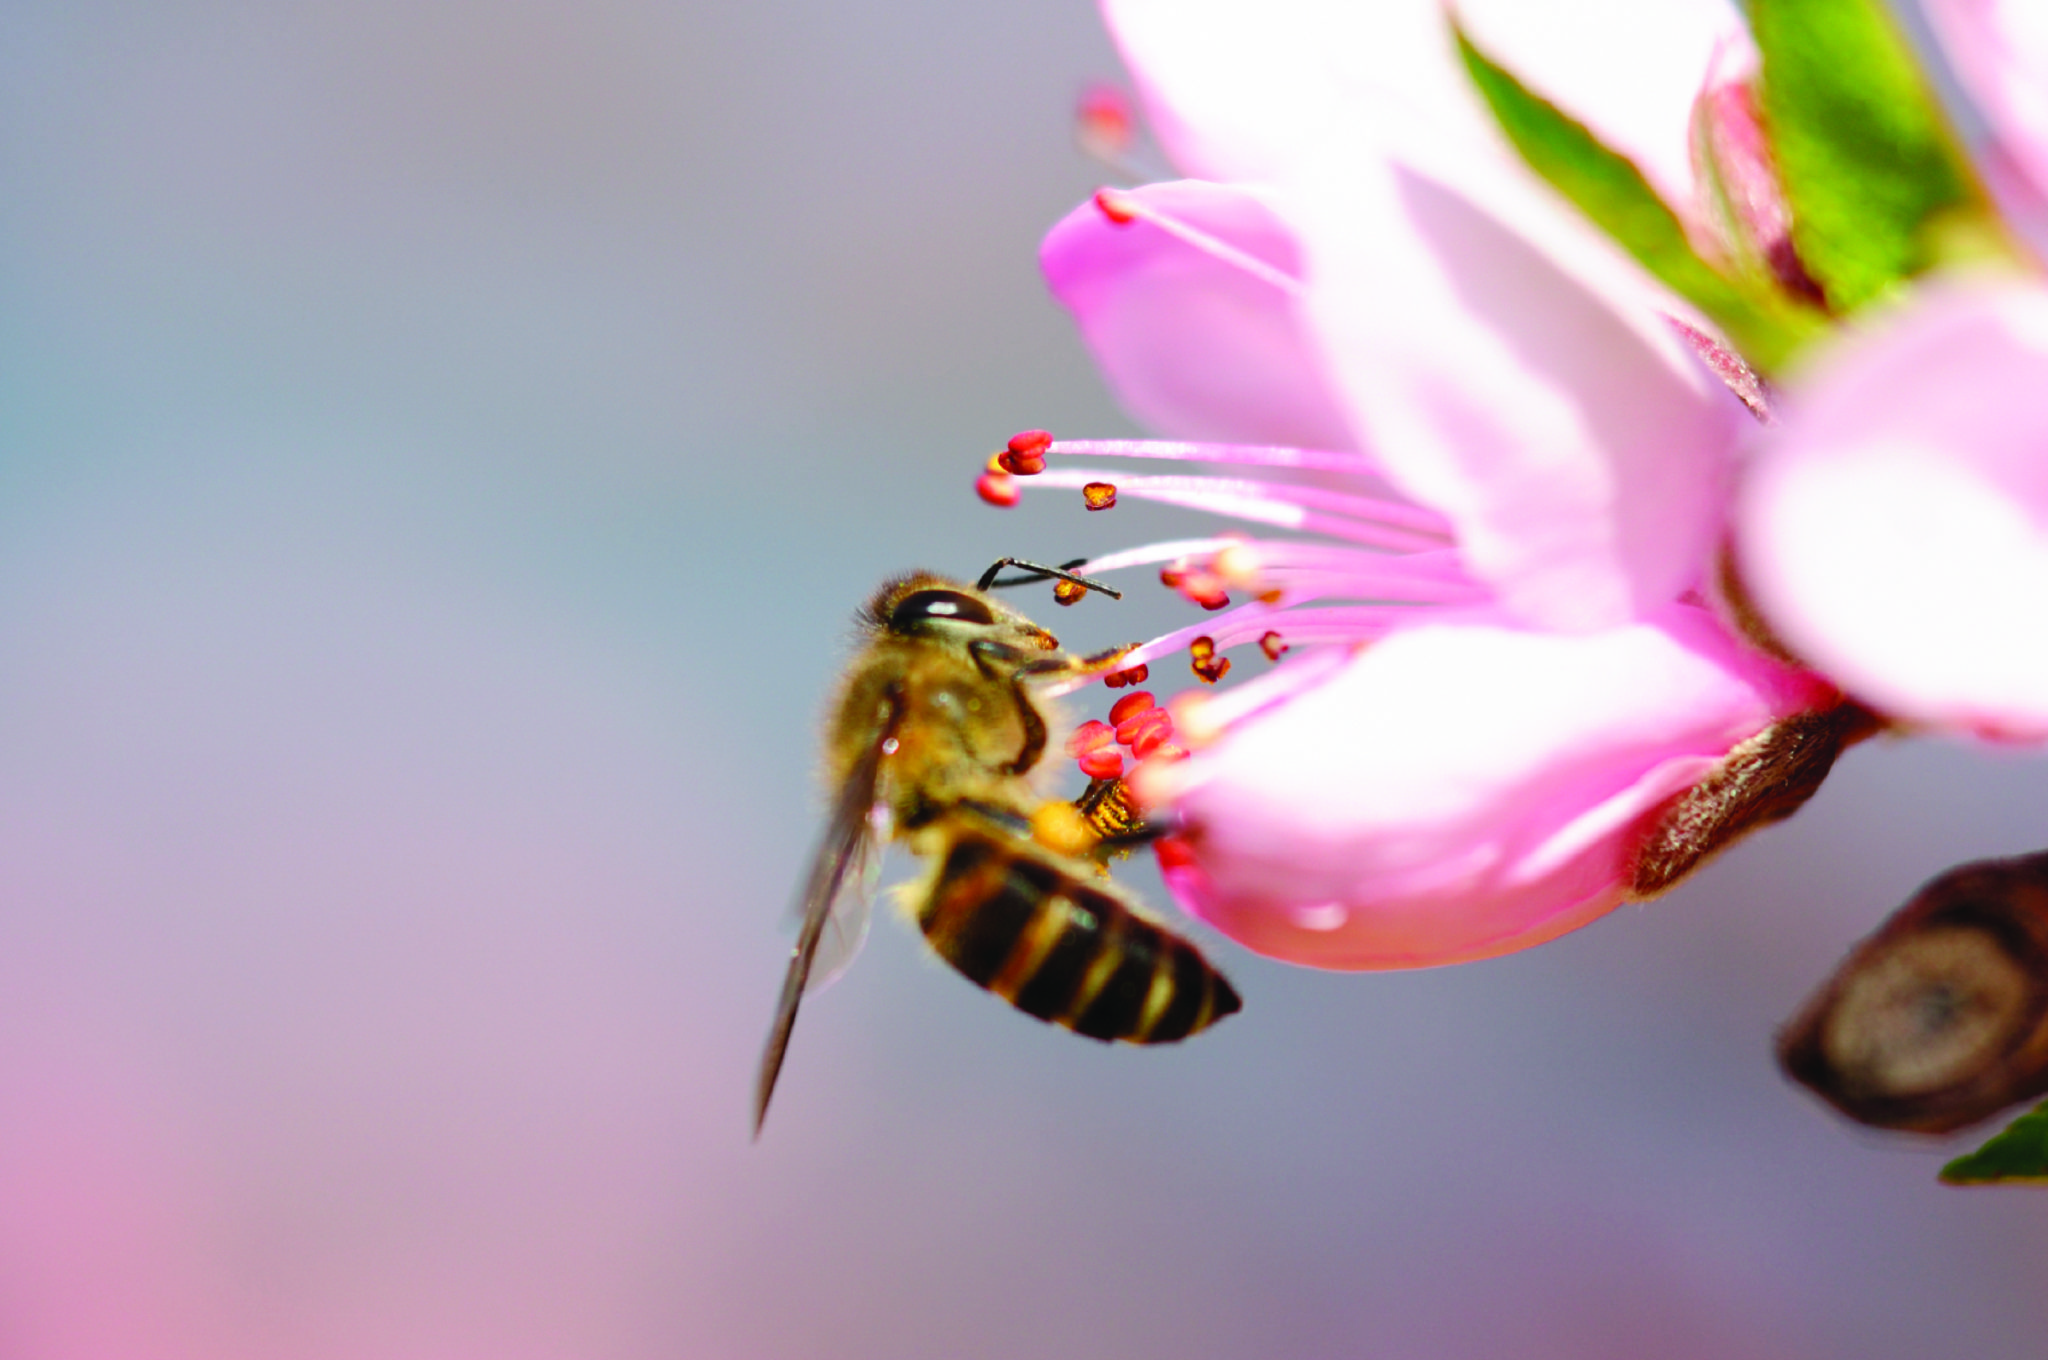 A honeybee approaching a peach blossom